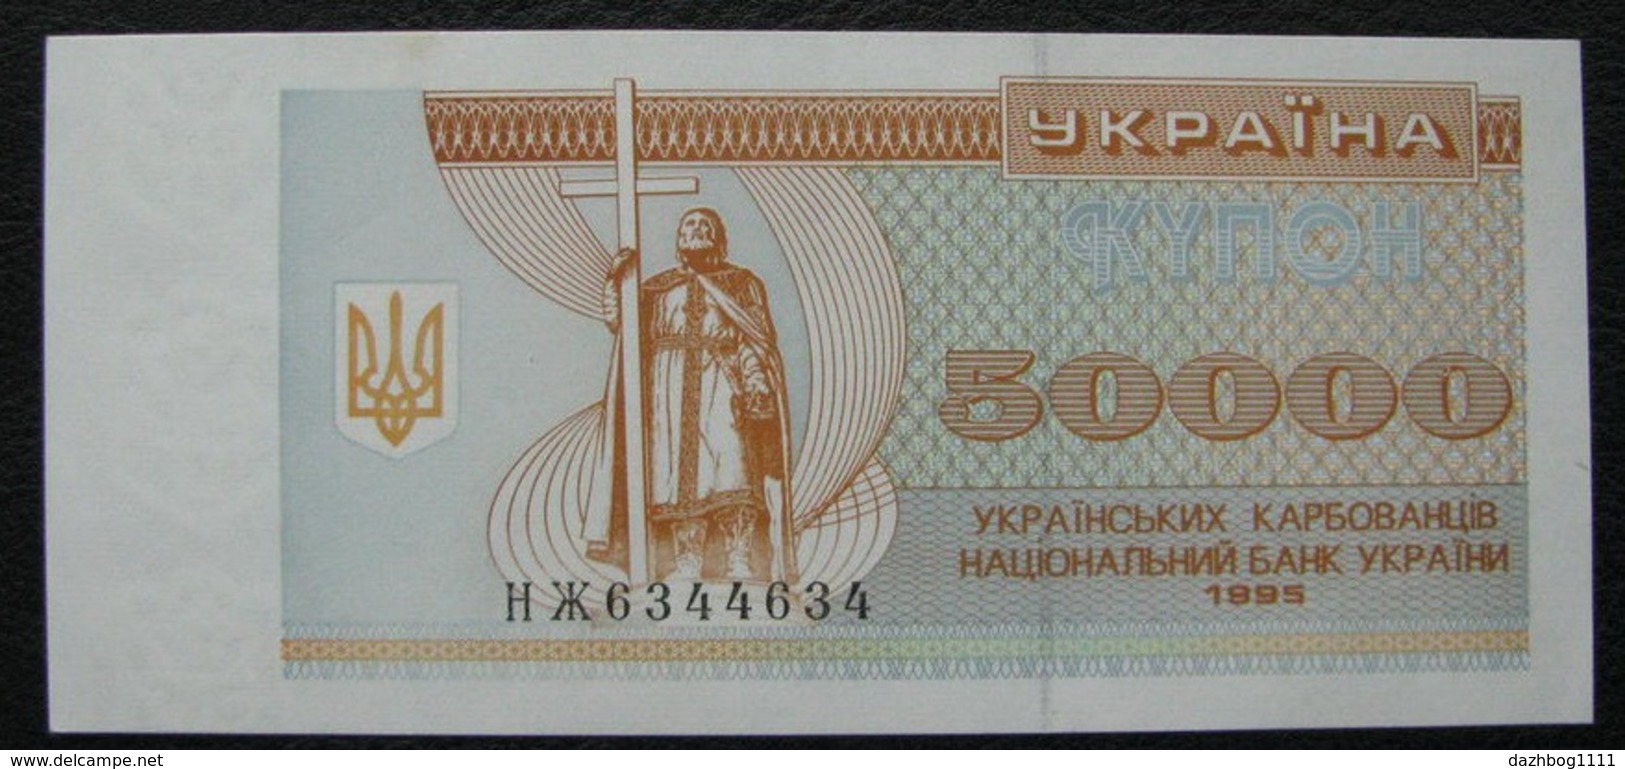 Ukraine 50000 Coupon - Carbovantsiv Karbovantsiv 1995 UNC Rare! - Ukraine